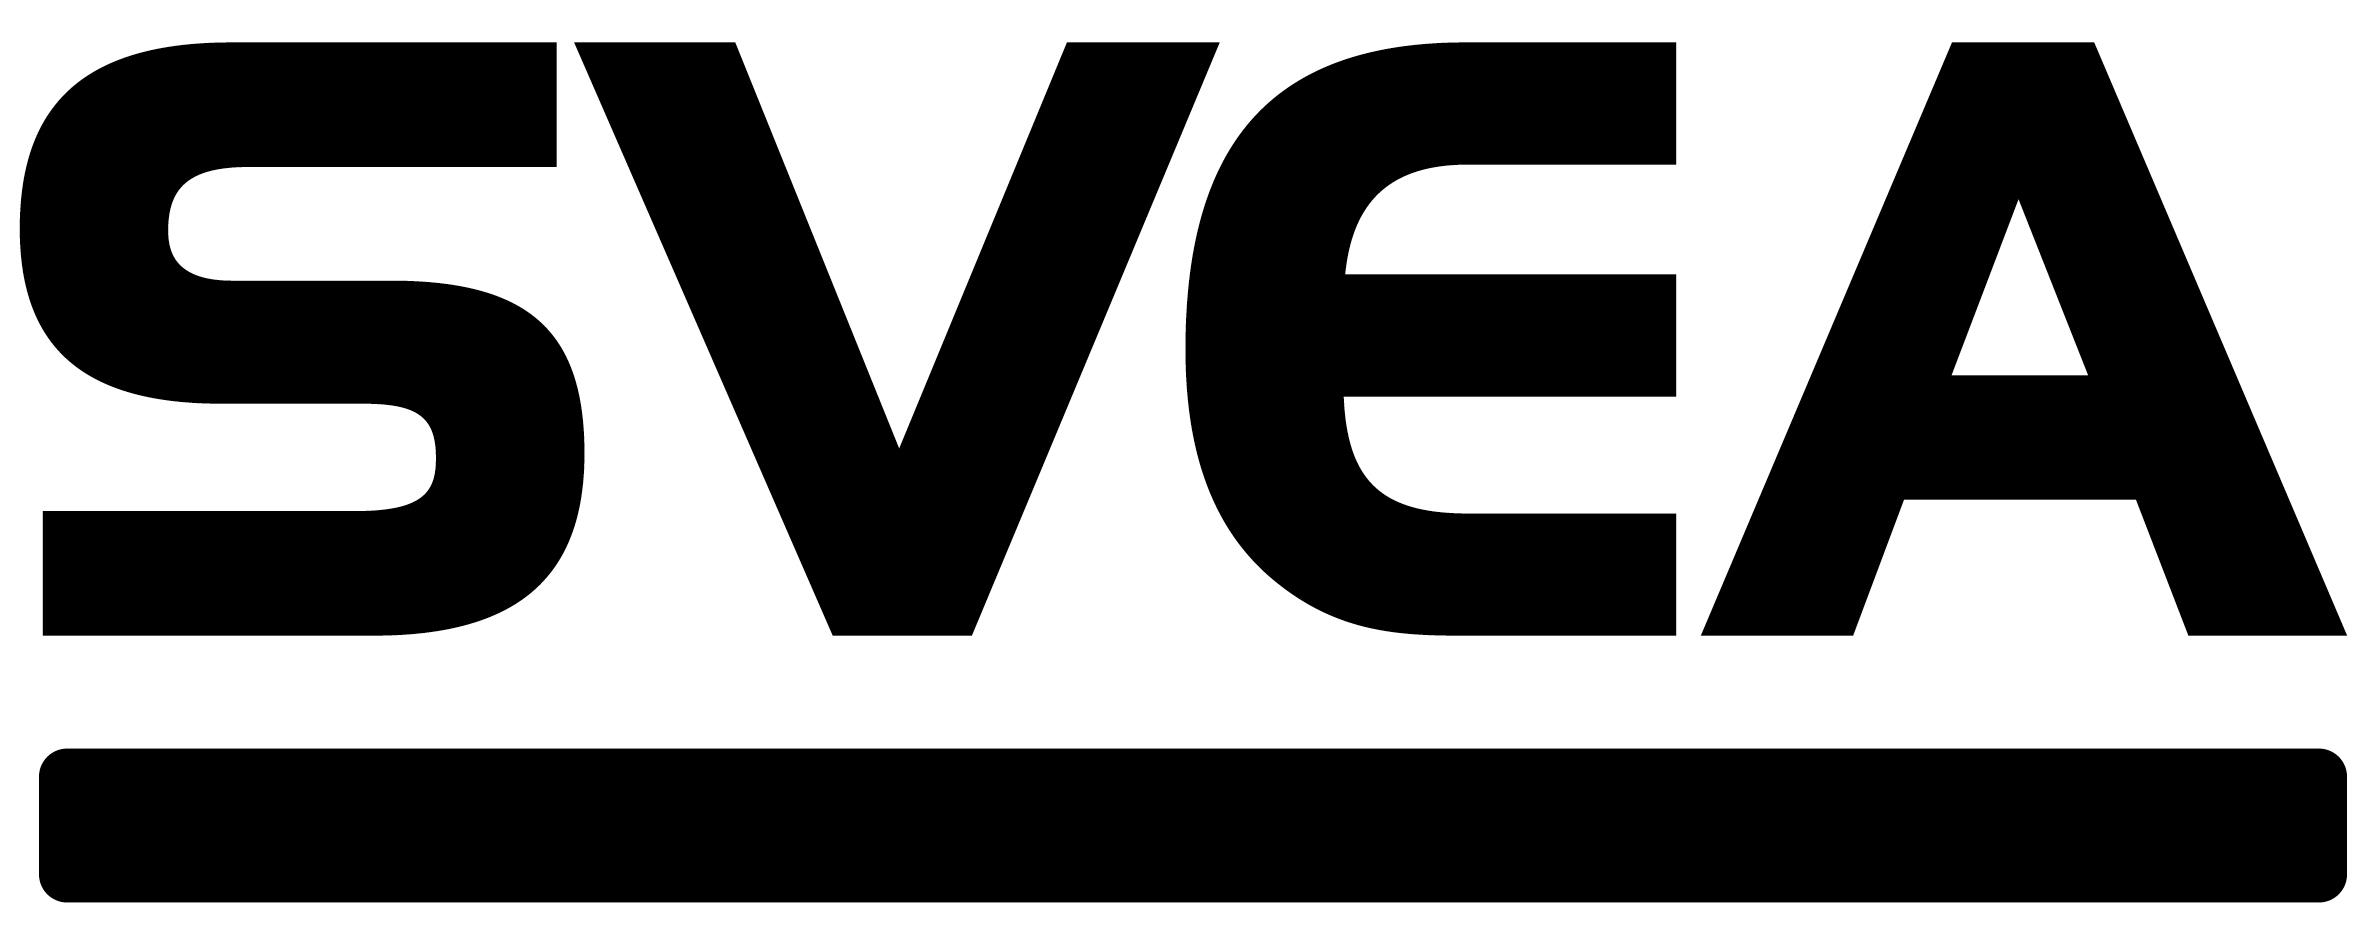 all black Svea logo